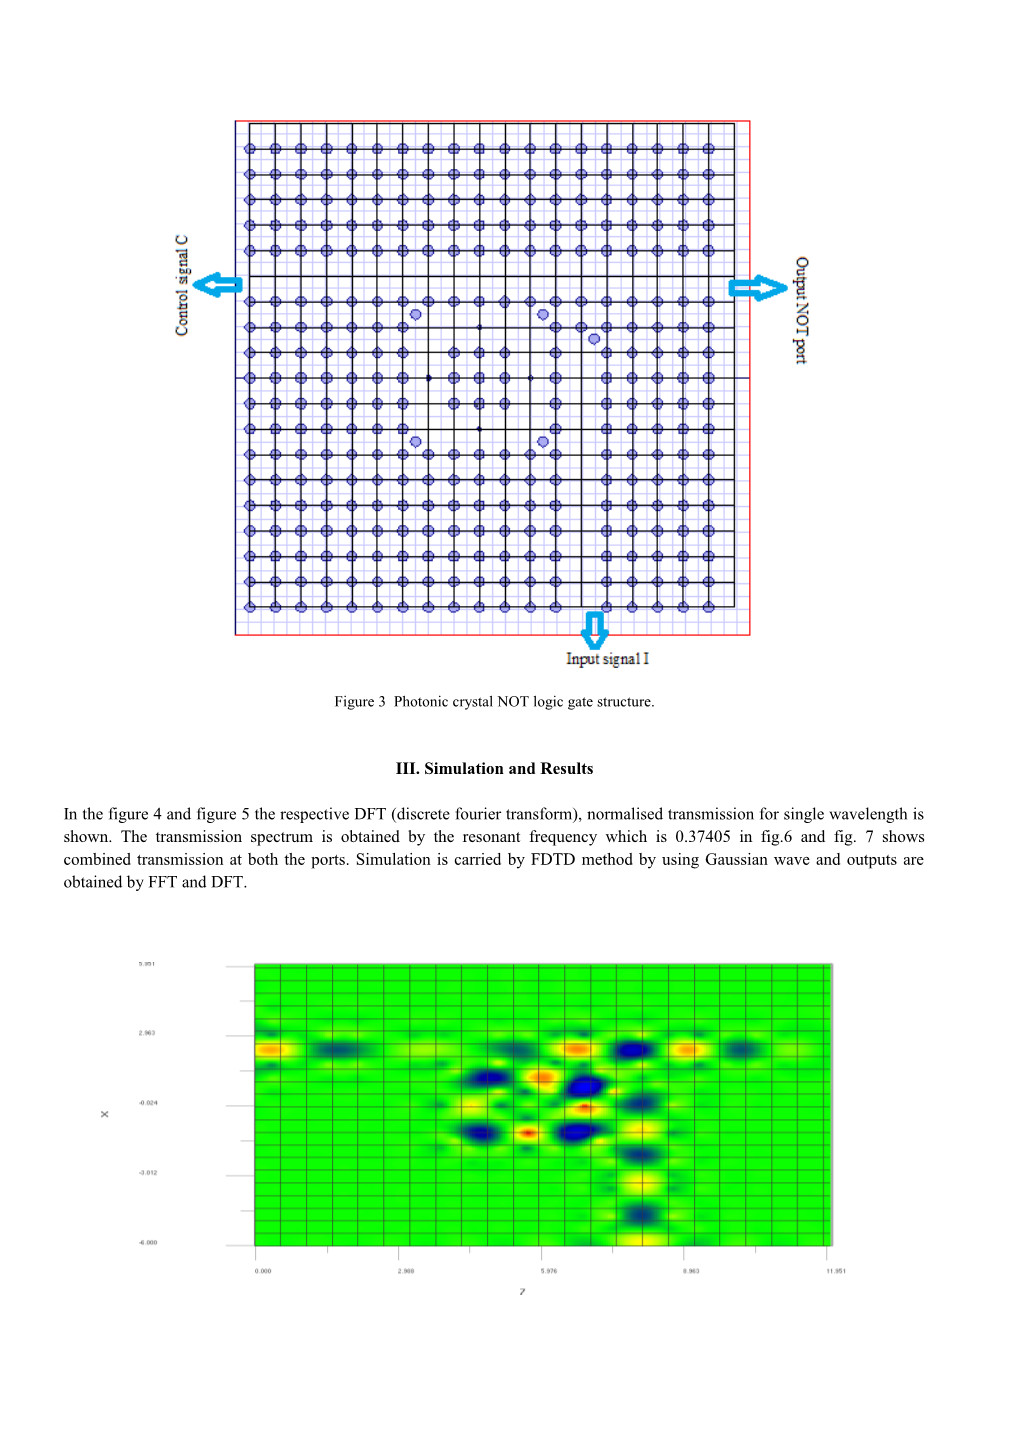 Design and Characteristics of Photonic Crystalbased Optical NOT Logic Gate